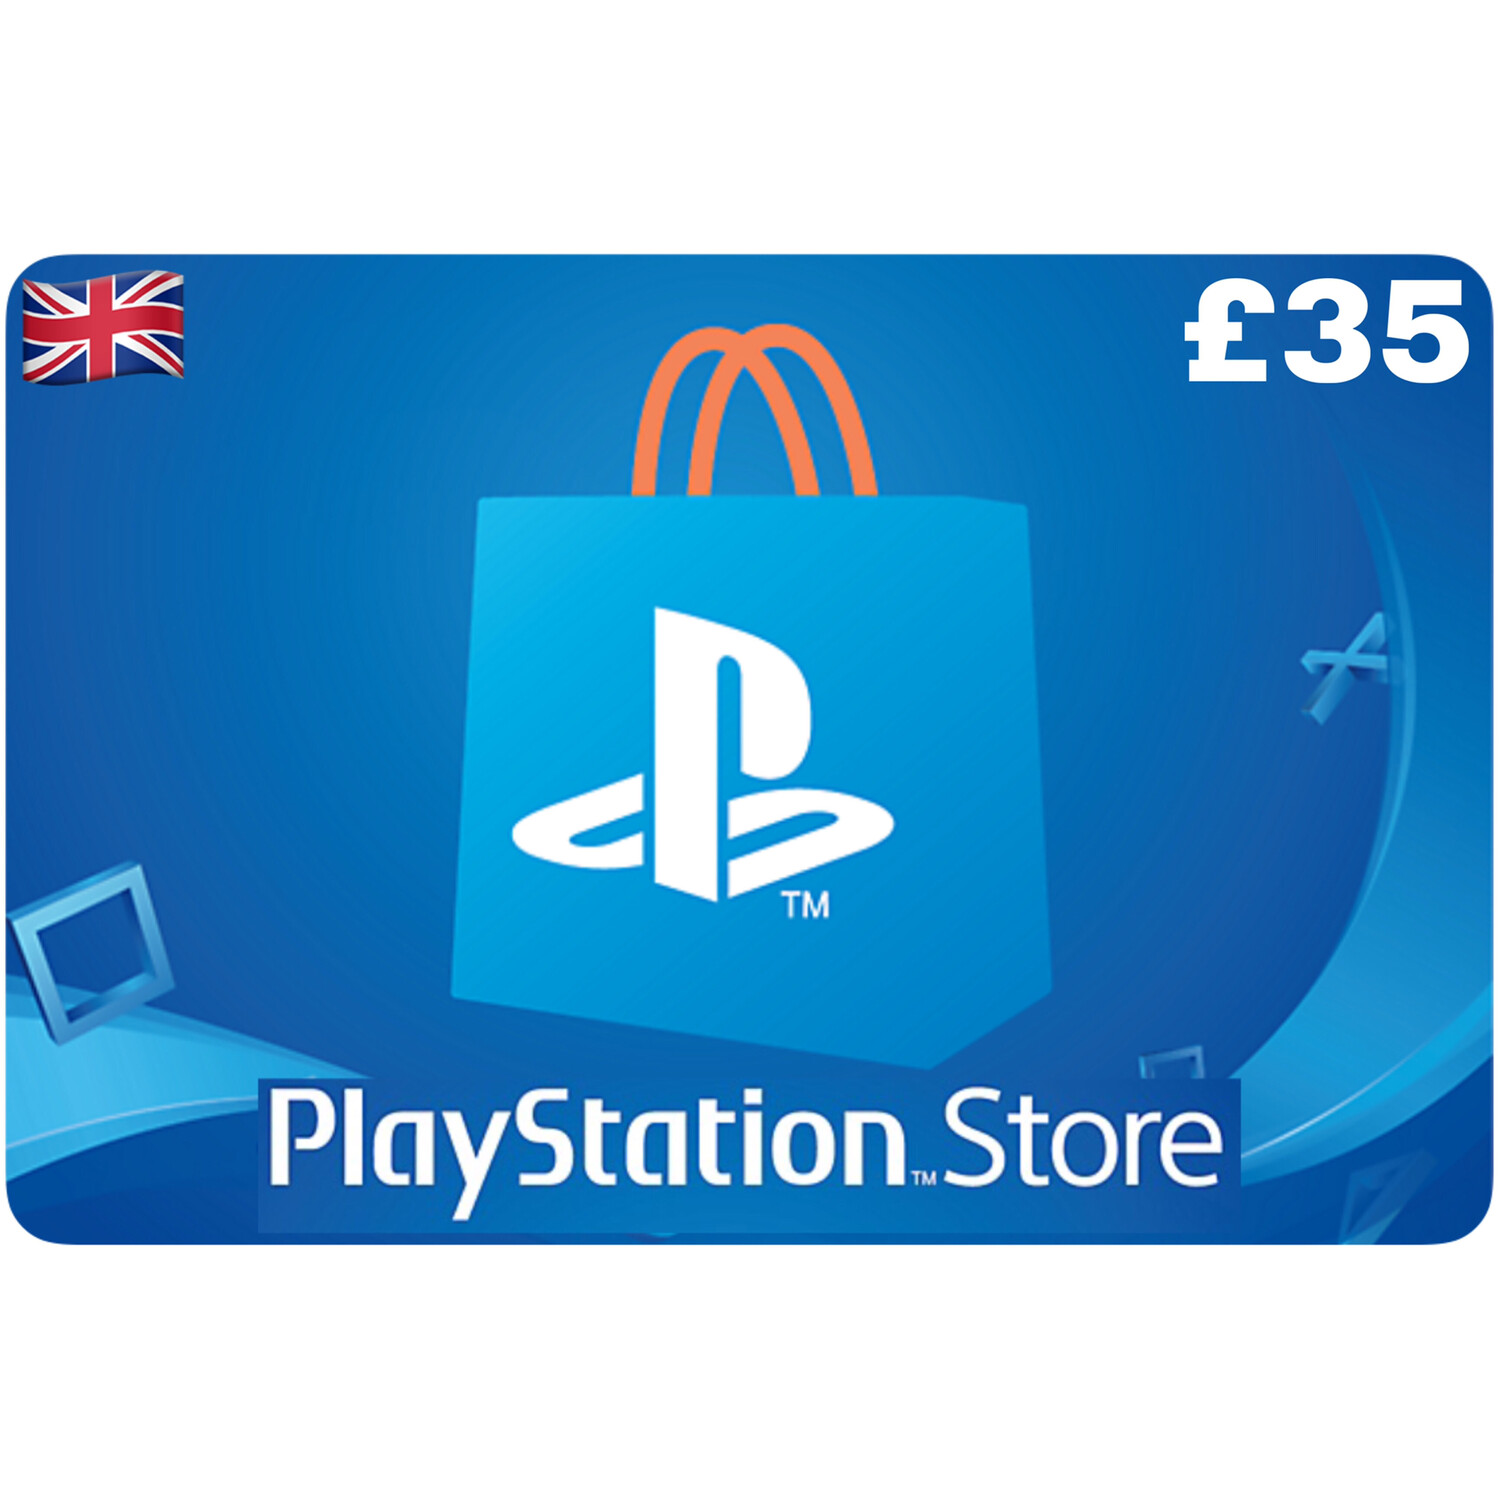 Playstation Store Gift Card UK £35